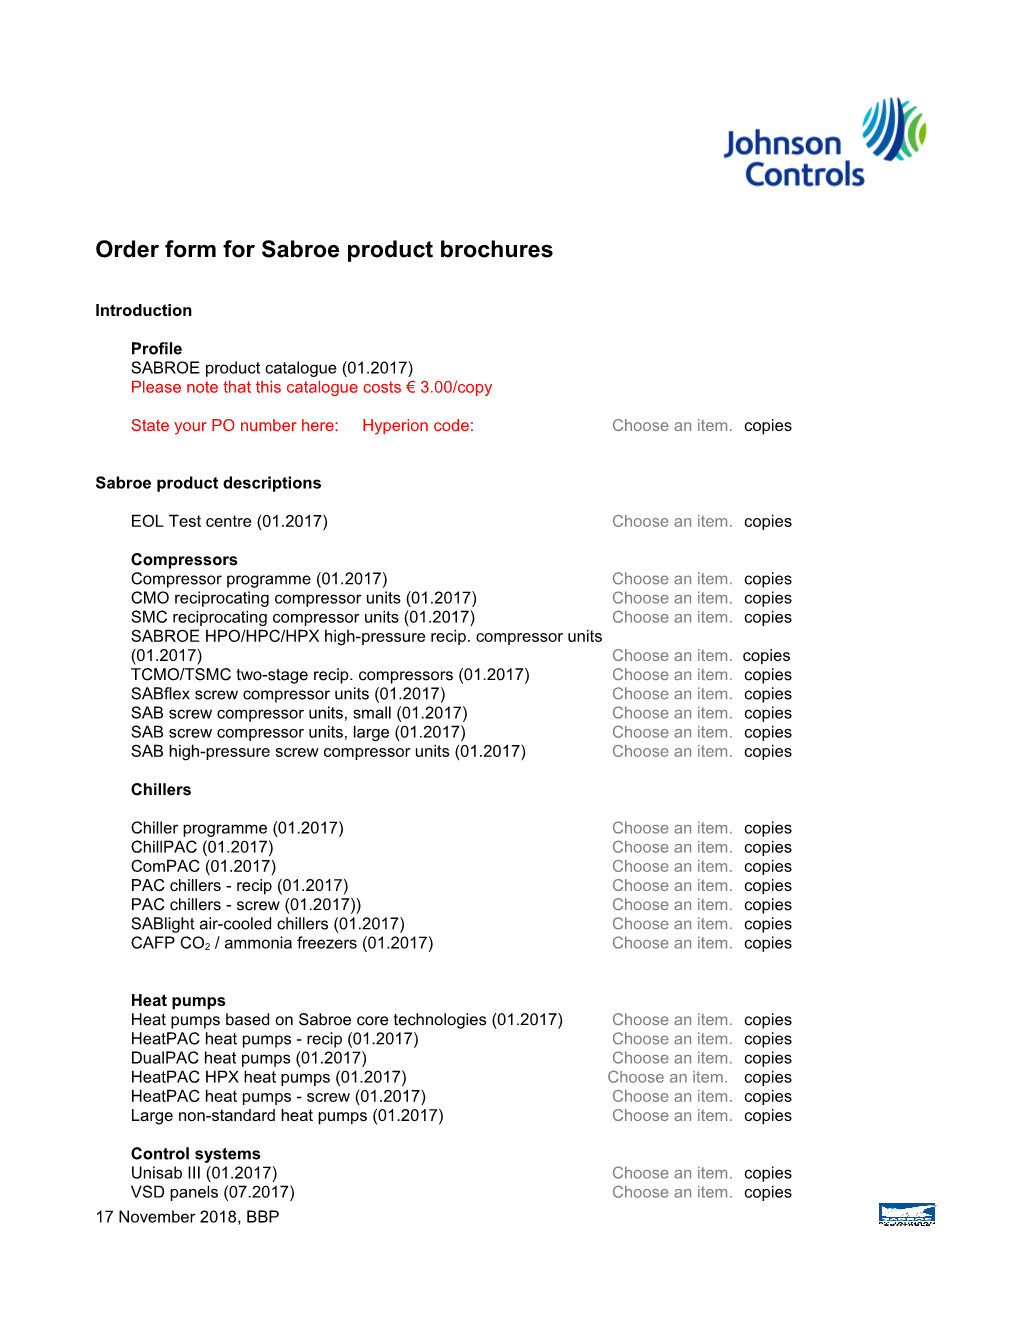 Order Form for Sabroe Product Brochures